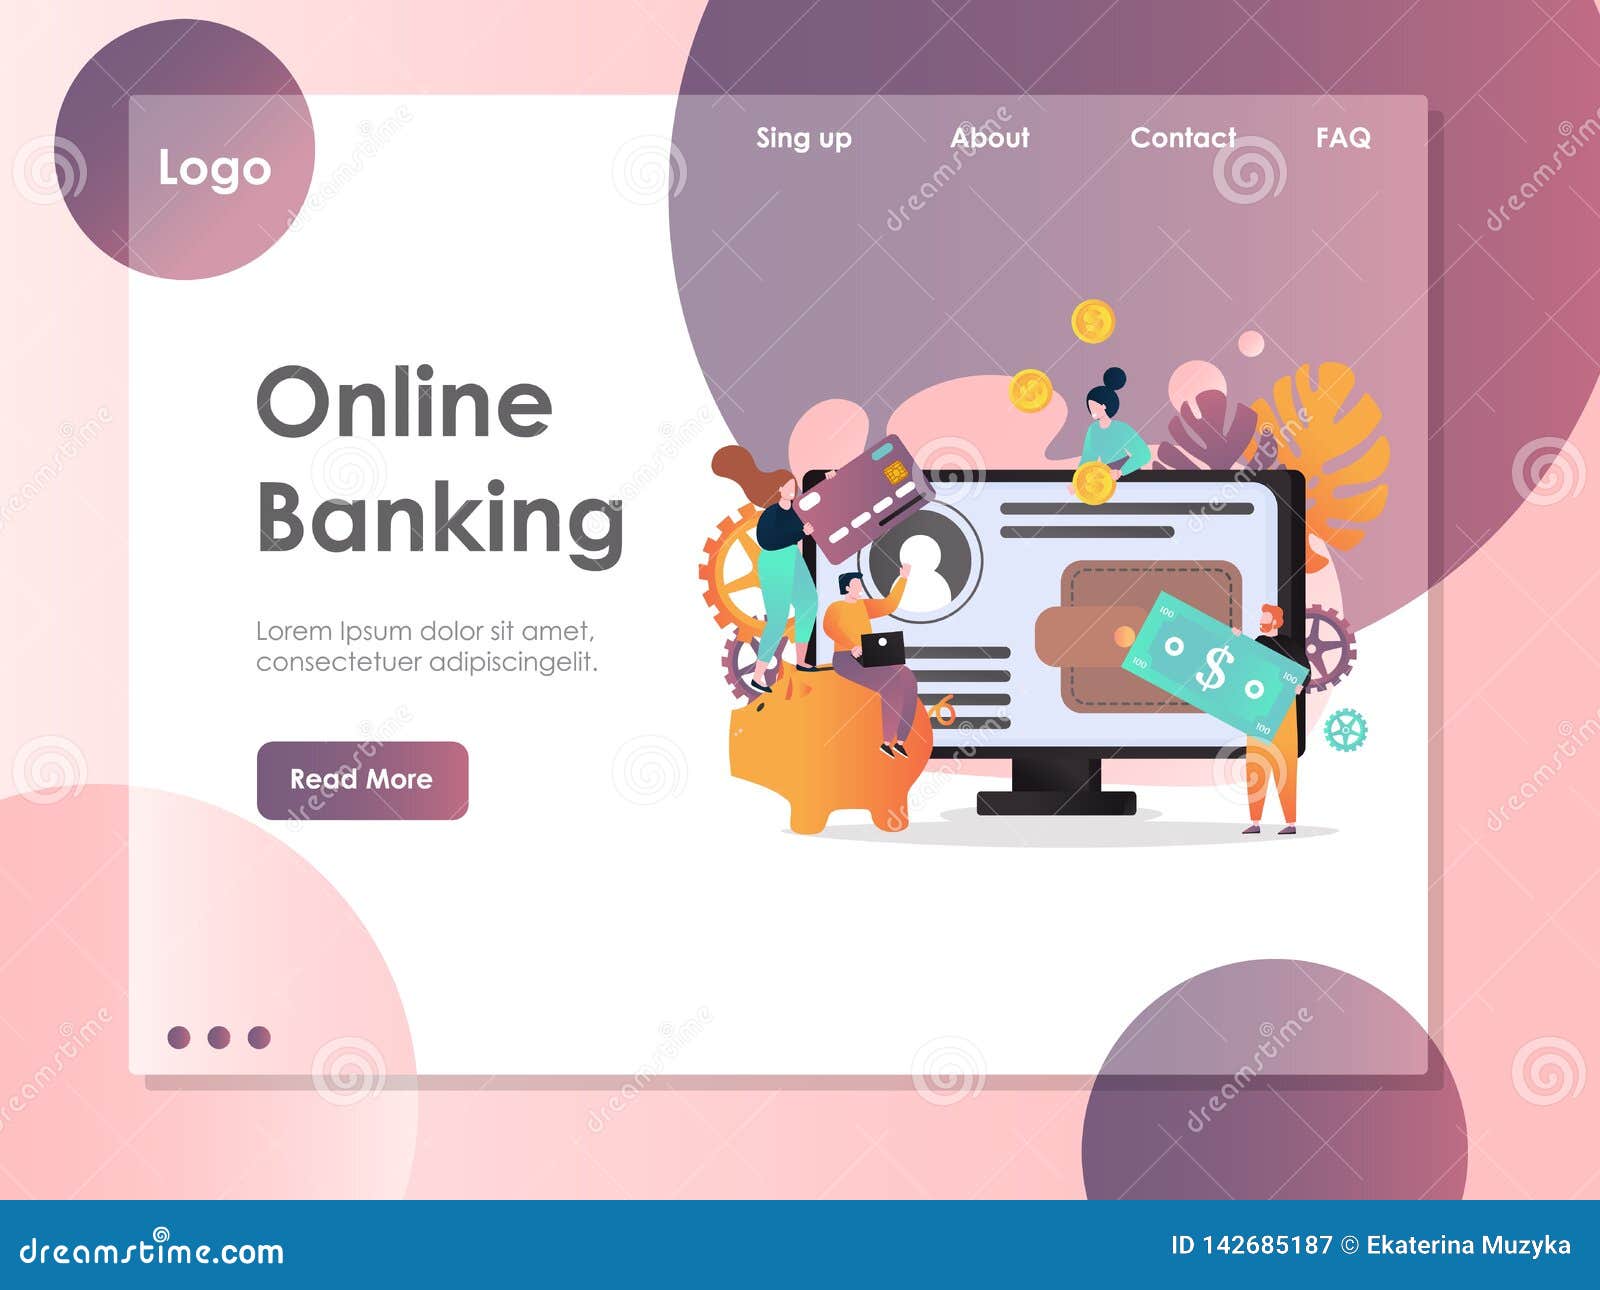 online banking design